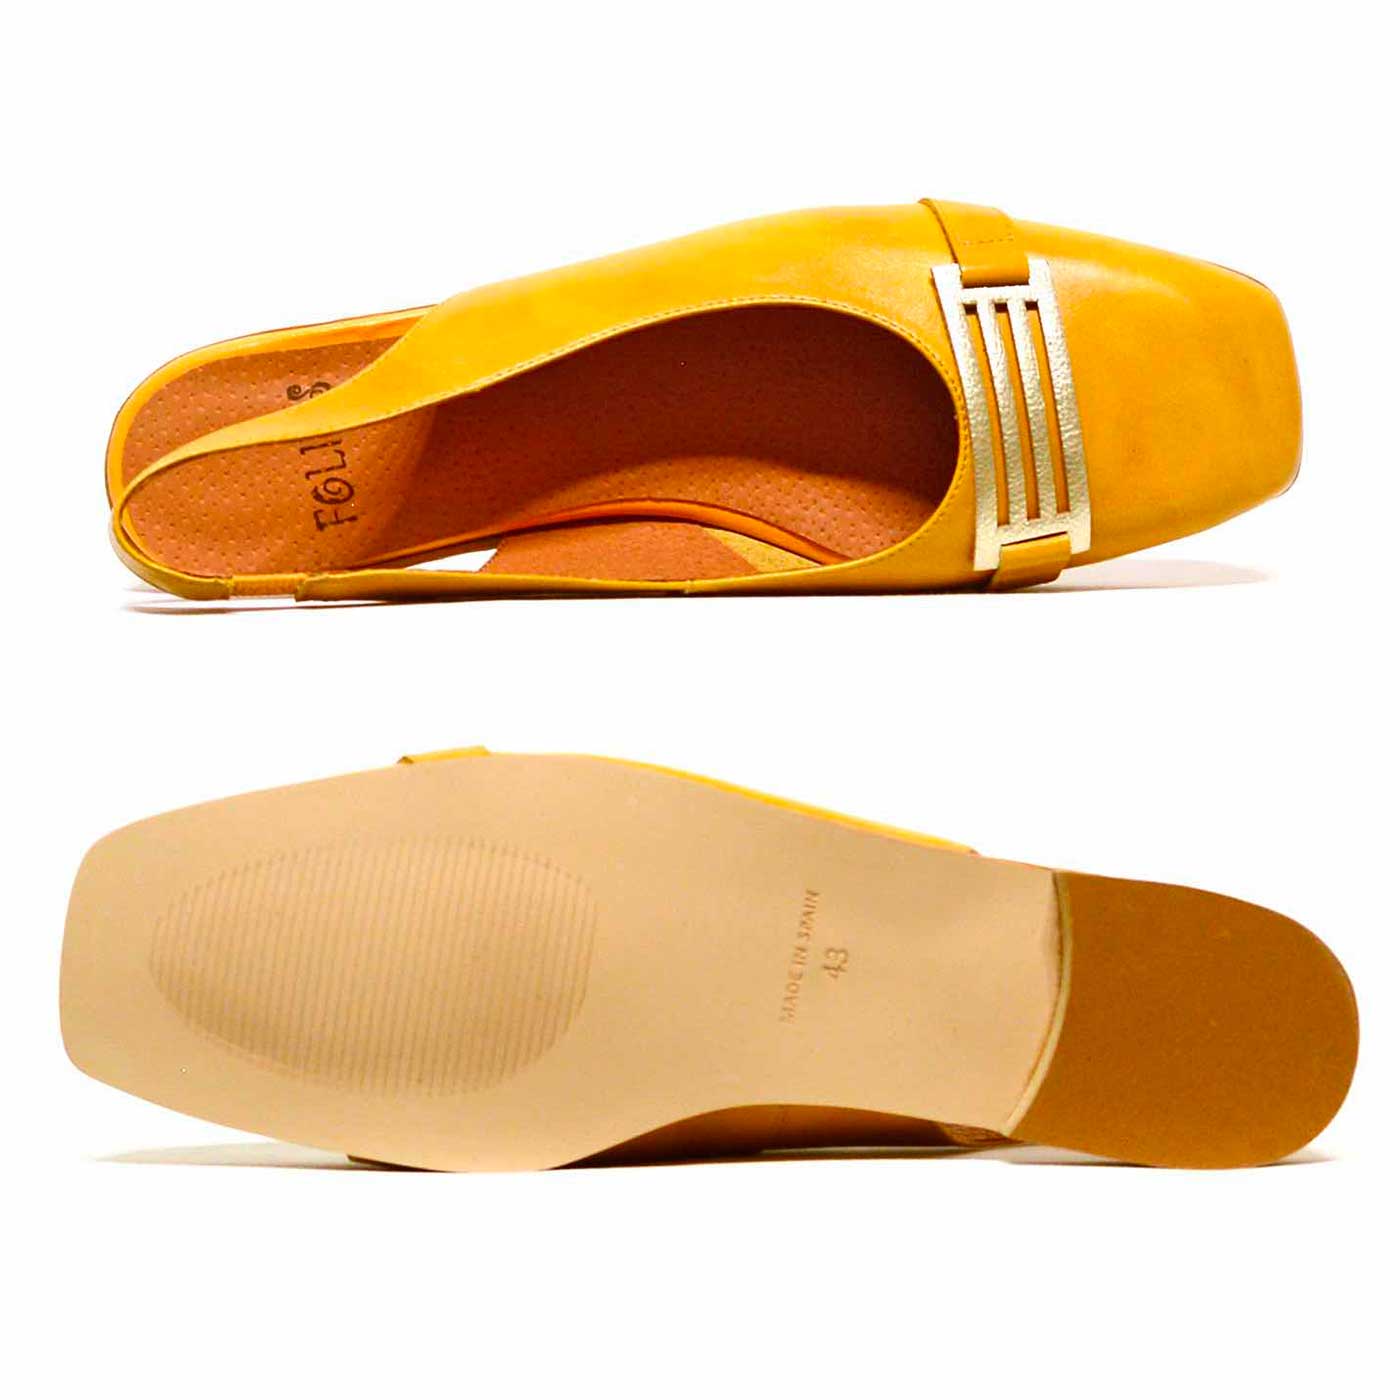 sandales cuir lisse jaune, chaussures femme grande taille